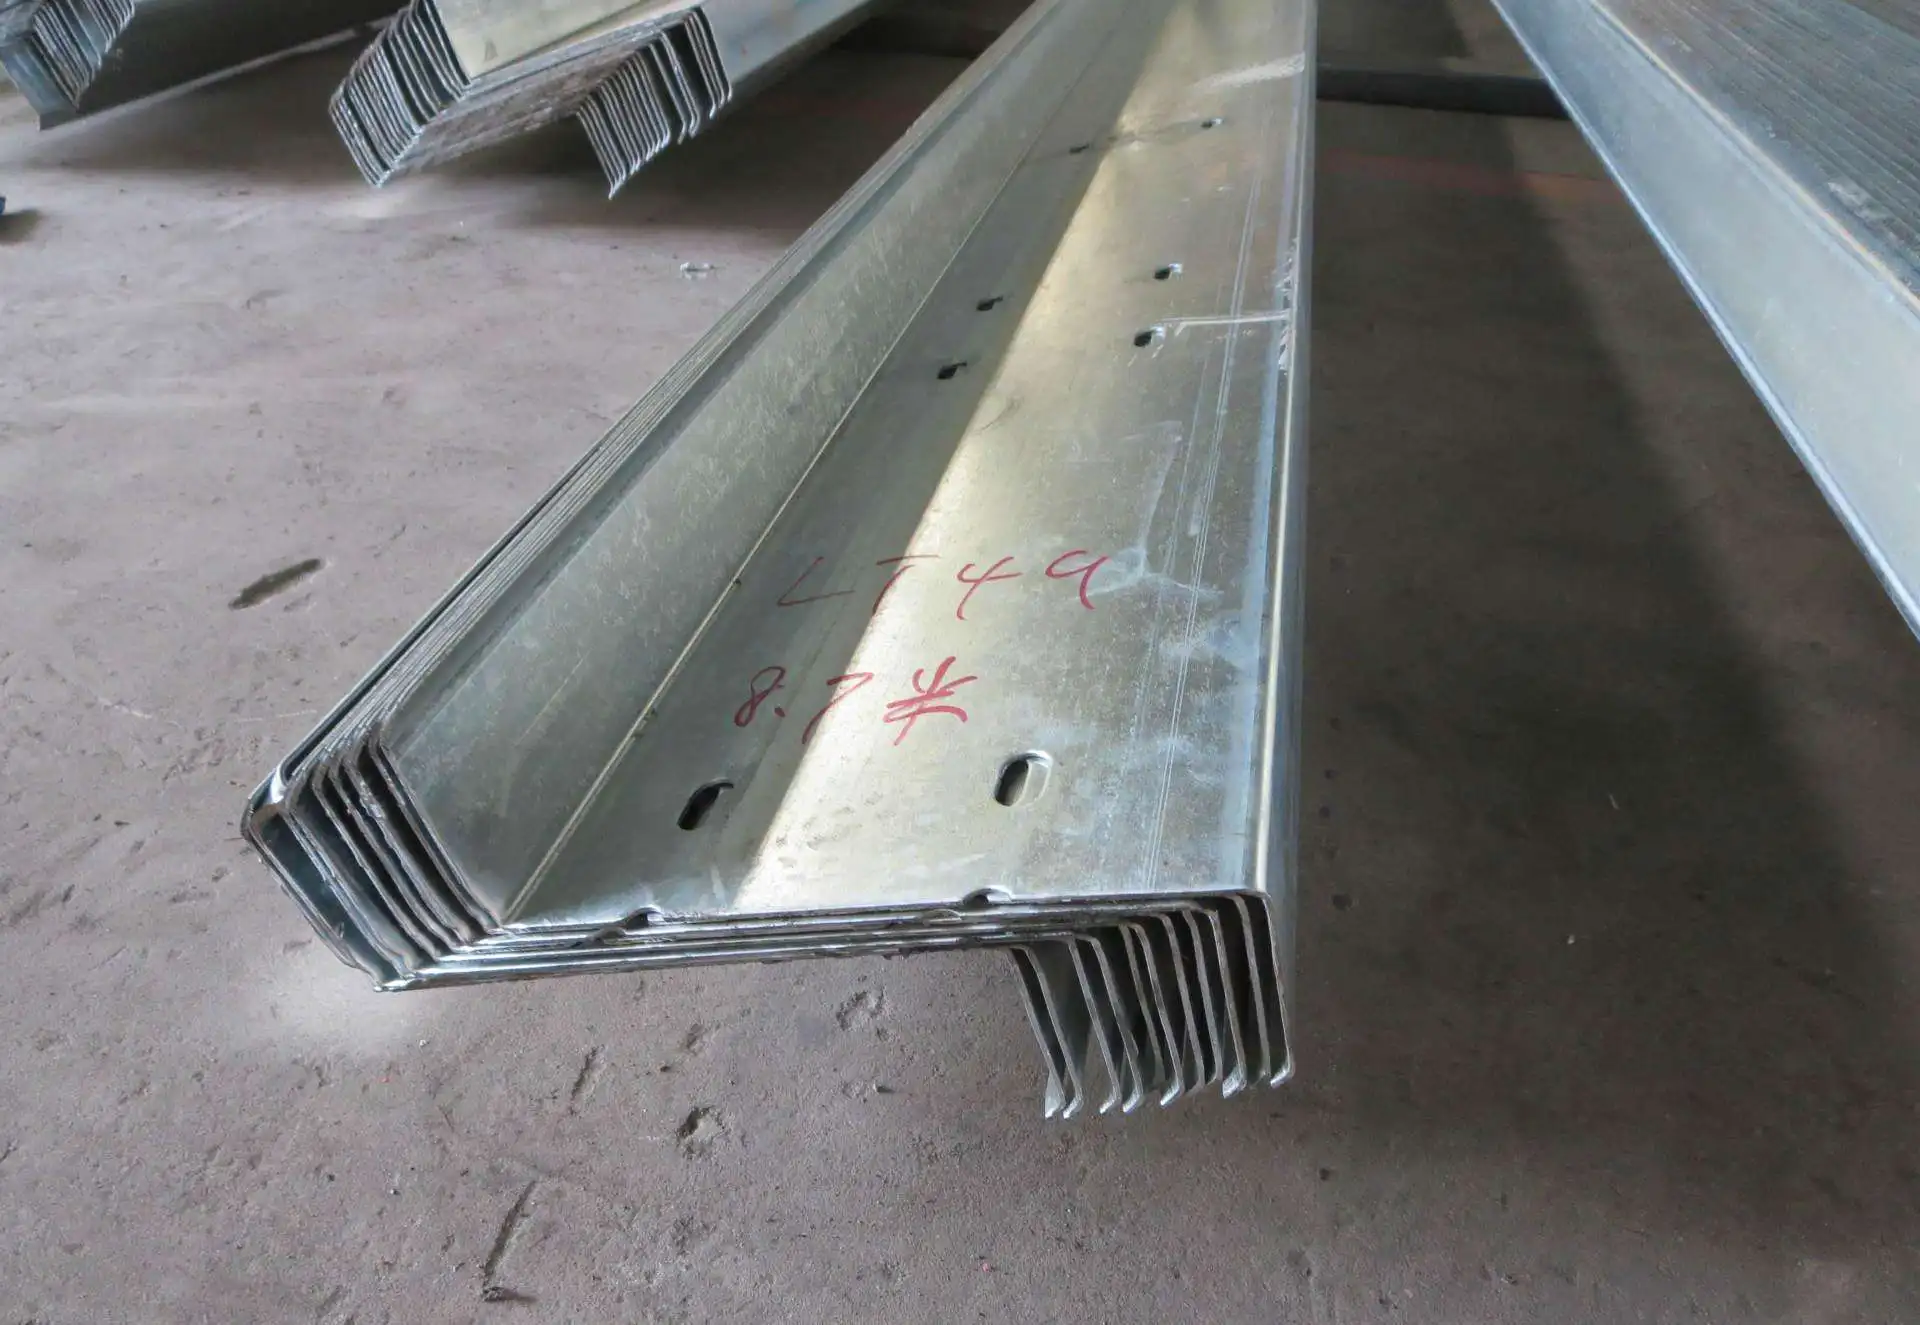 Sanxing C Z Shape Steel Purlin Roll Forming Machine